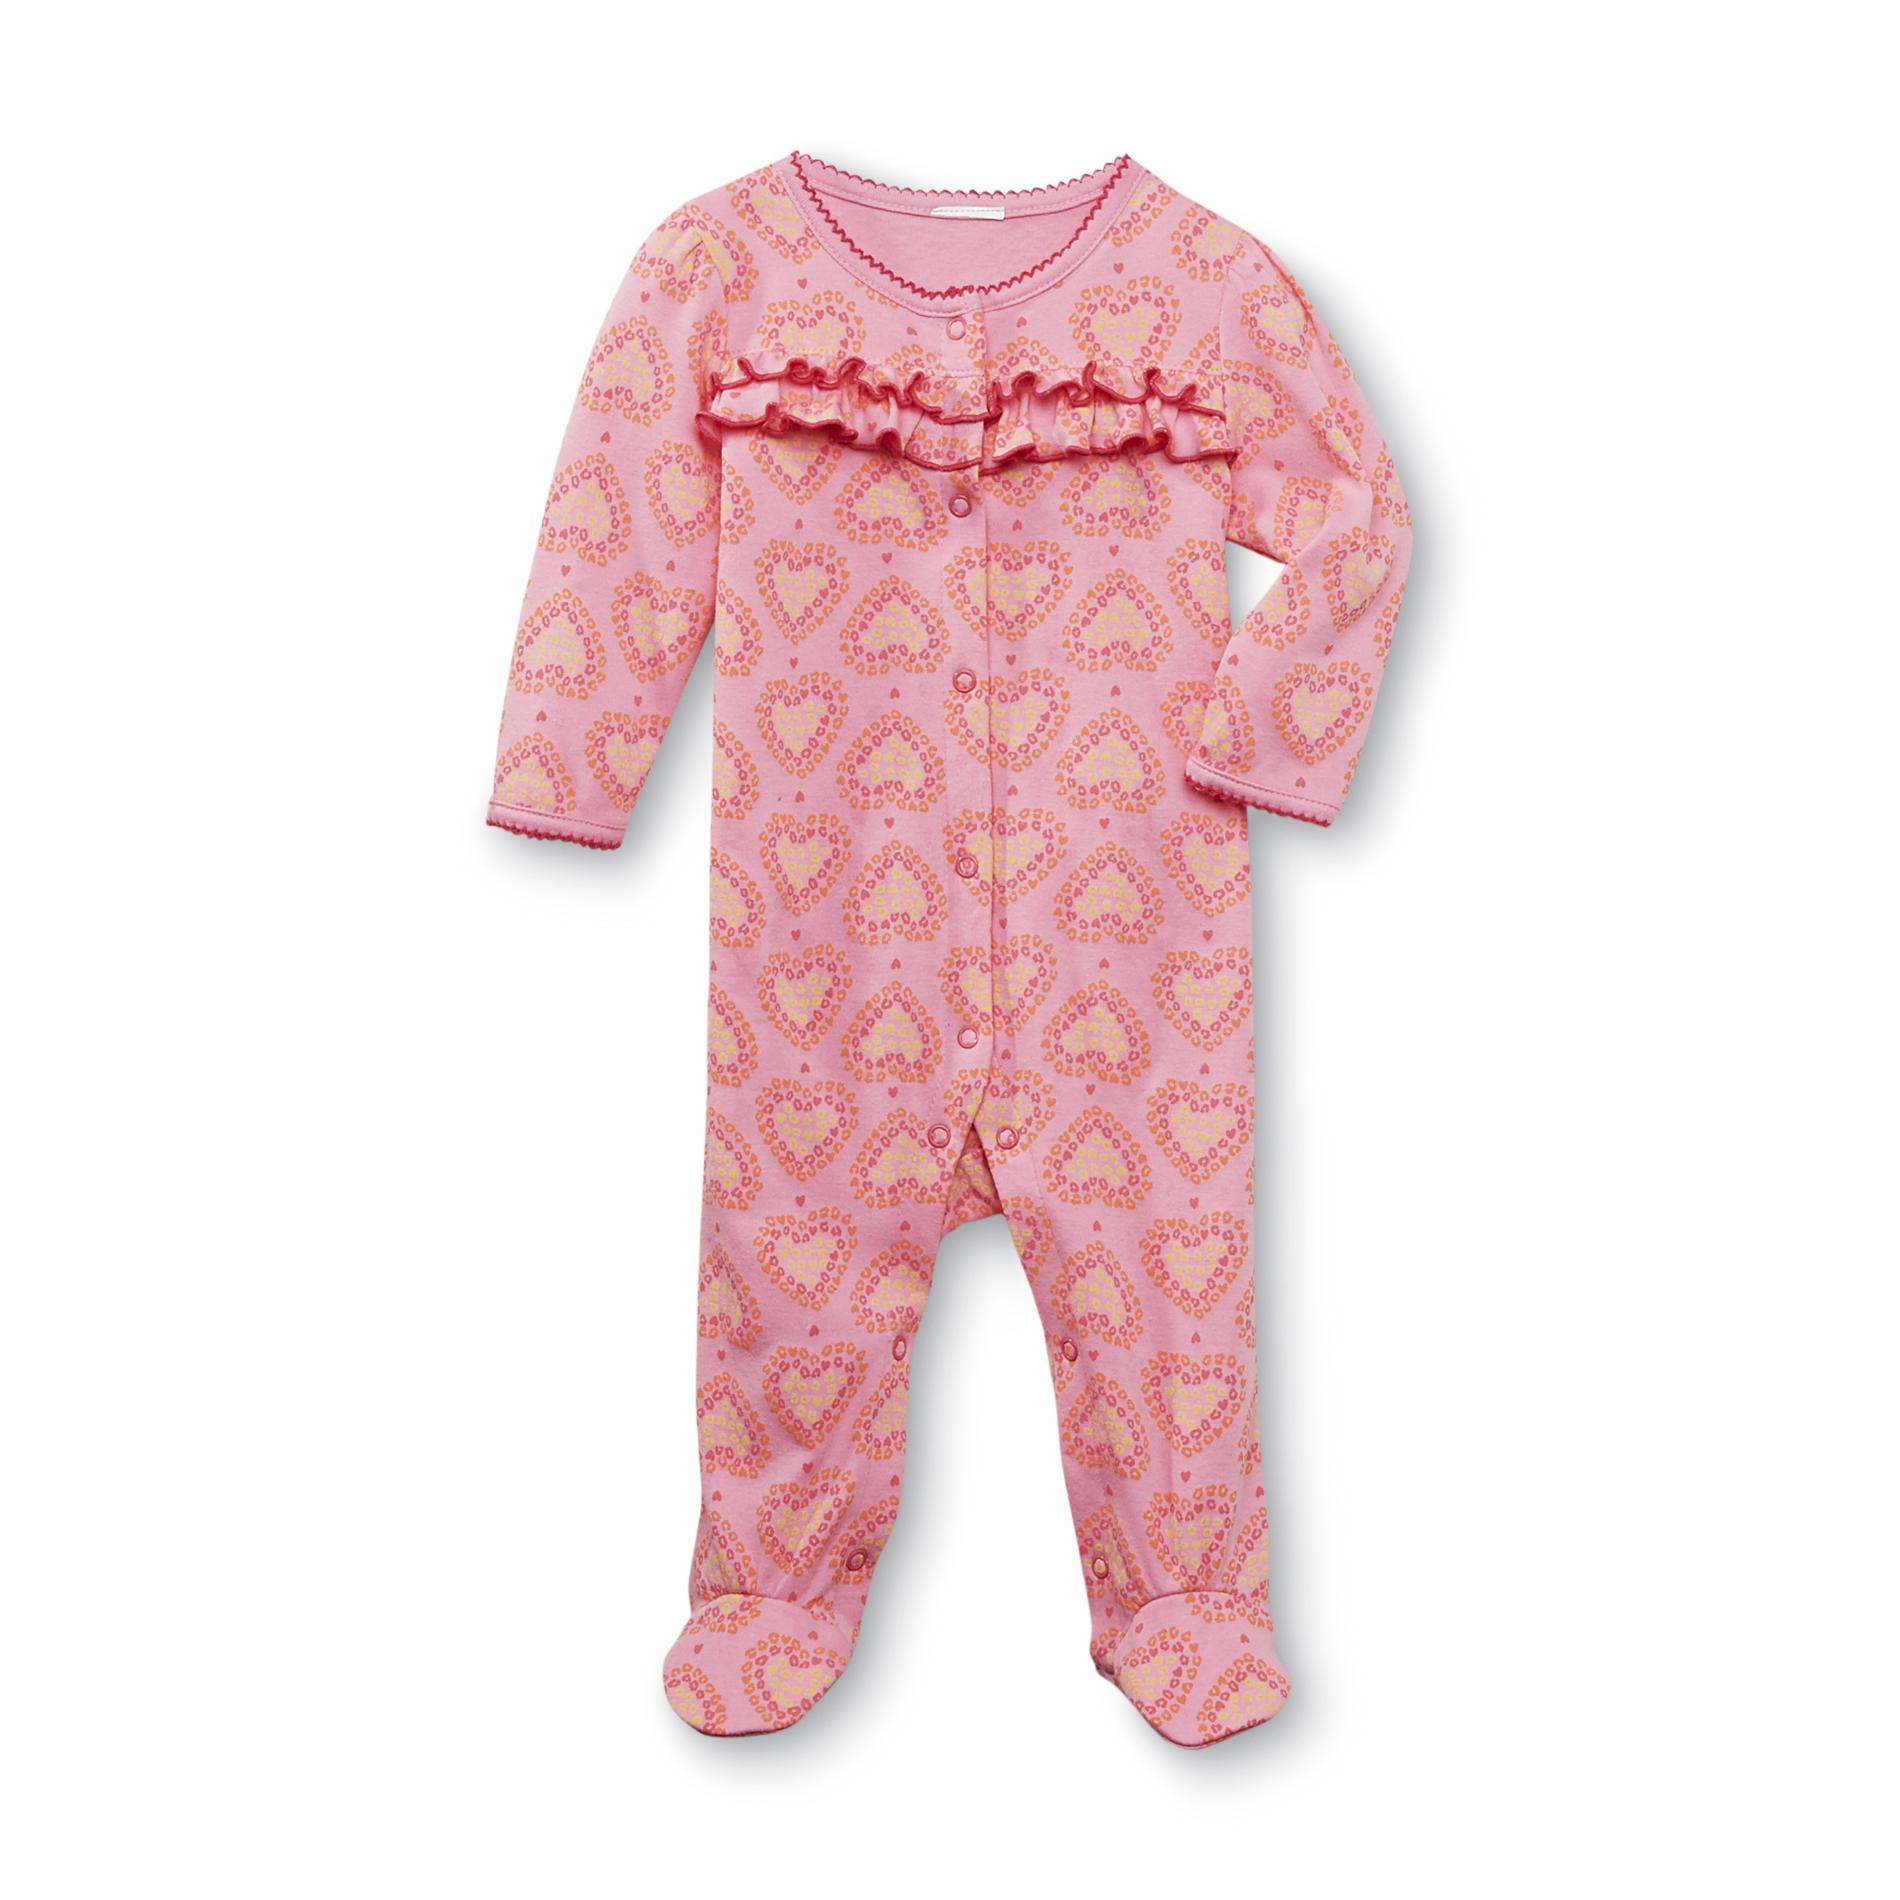 Small Wonders Newborn Girl's Footed Sleeper Pajamas - Hearts